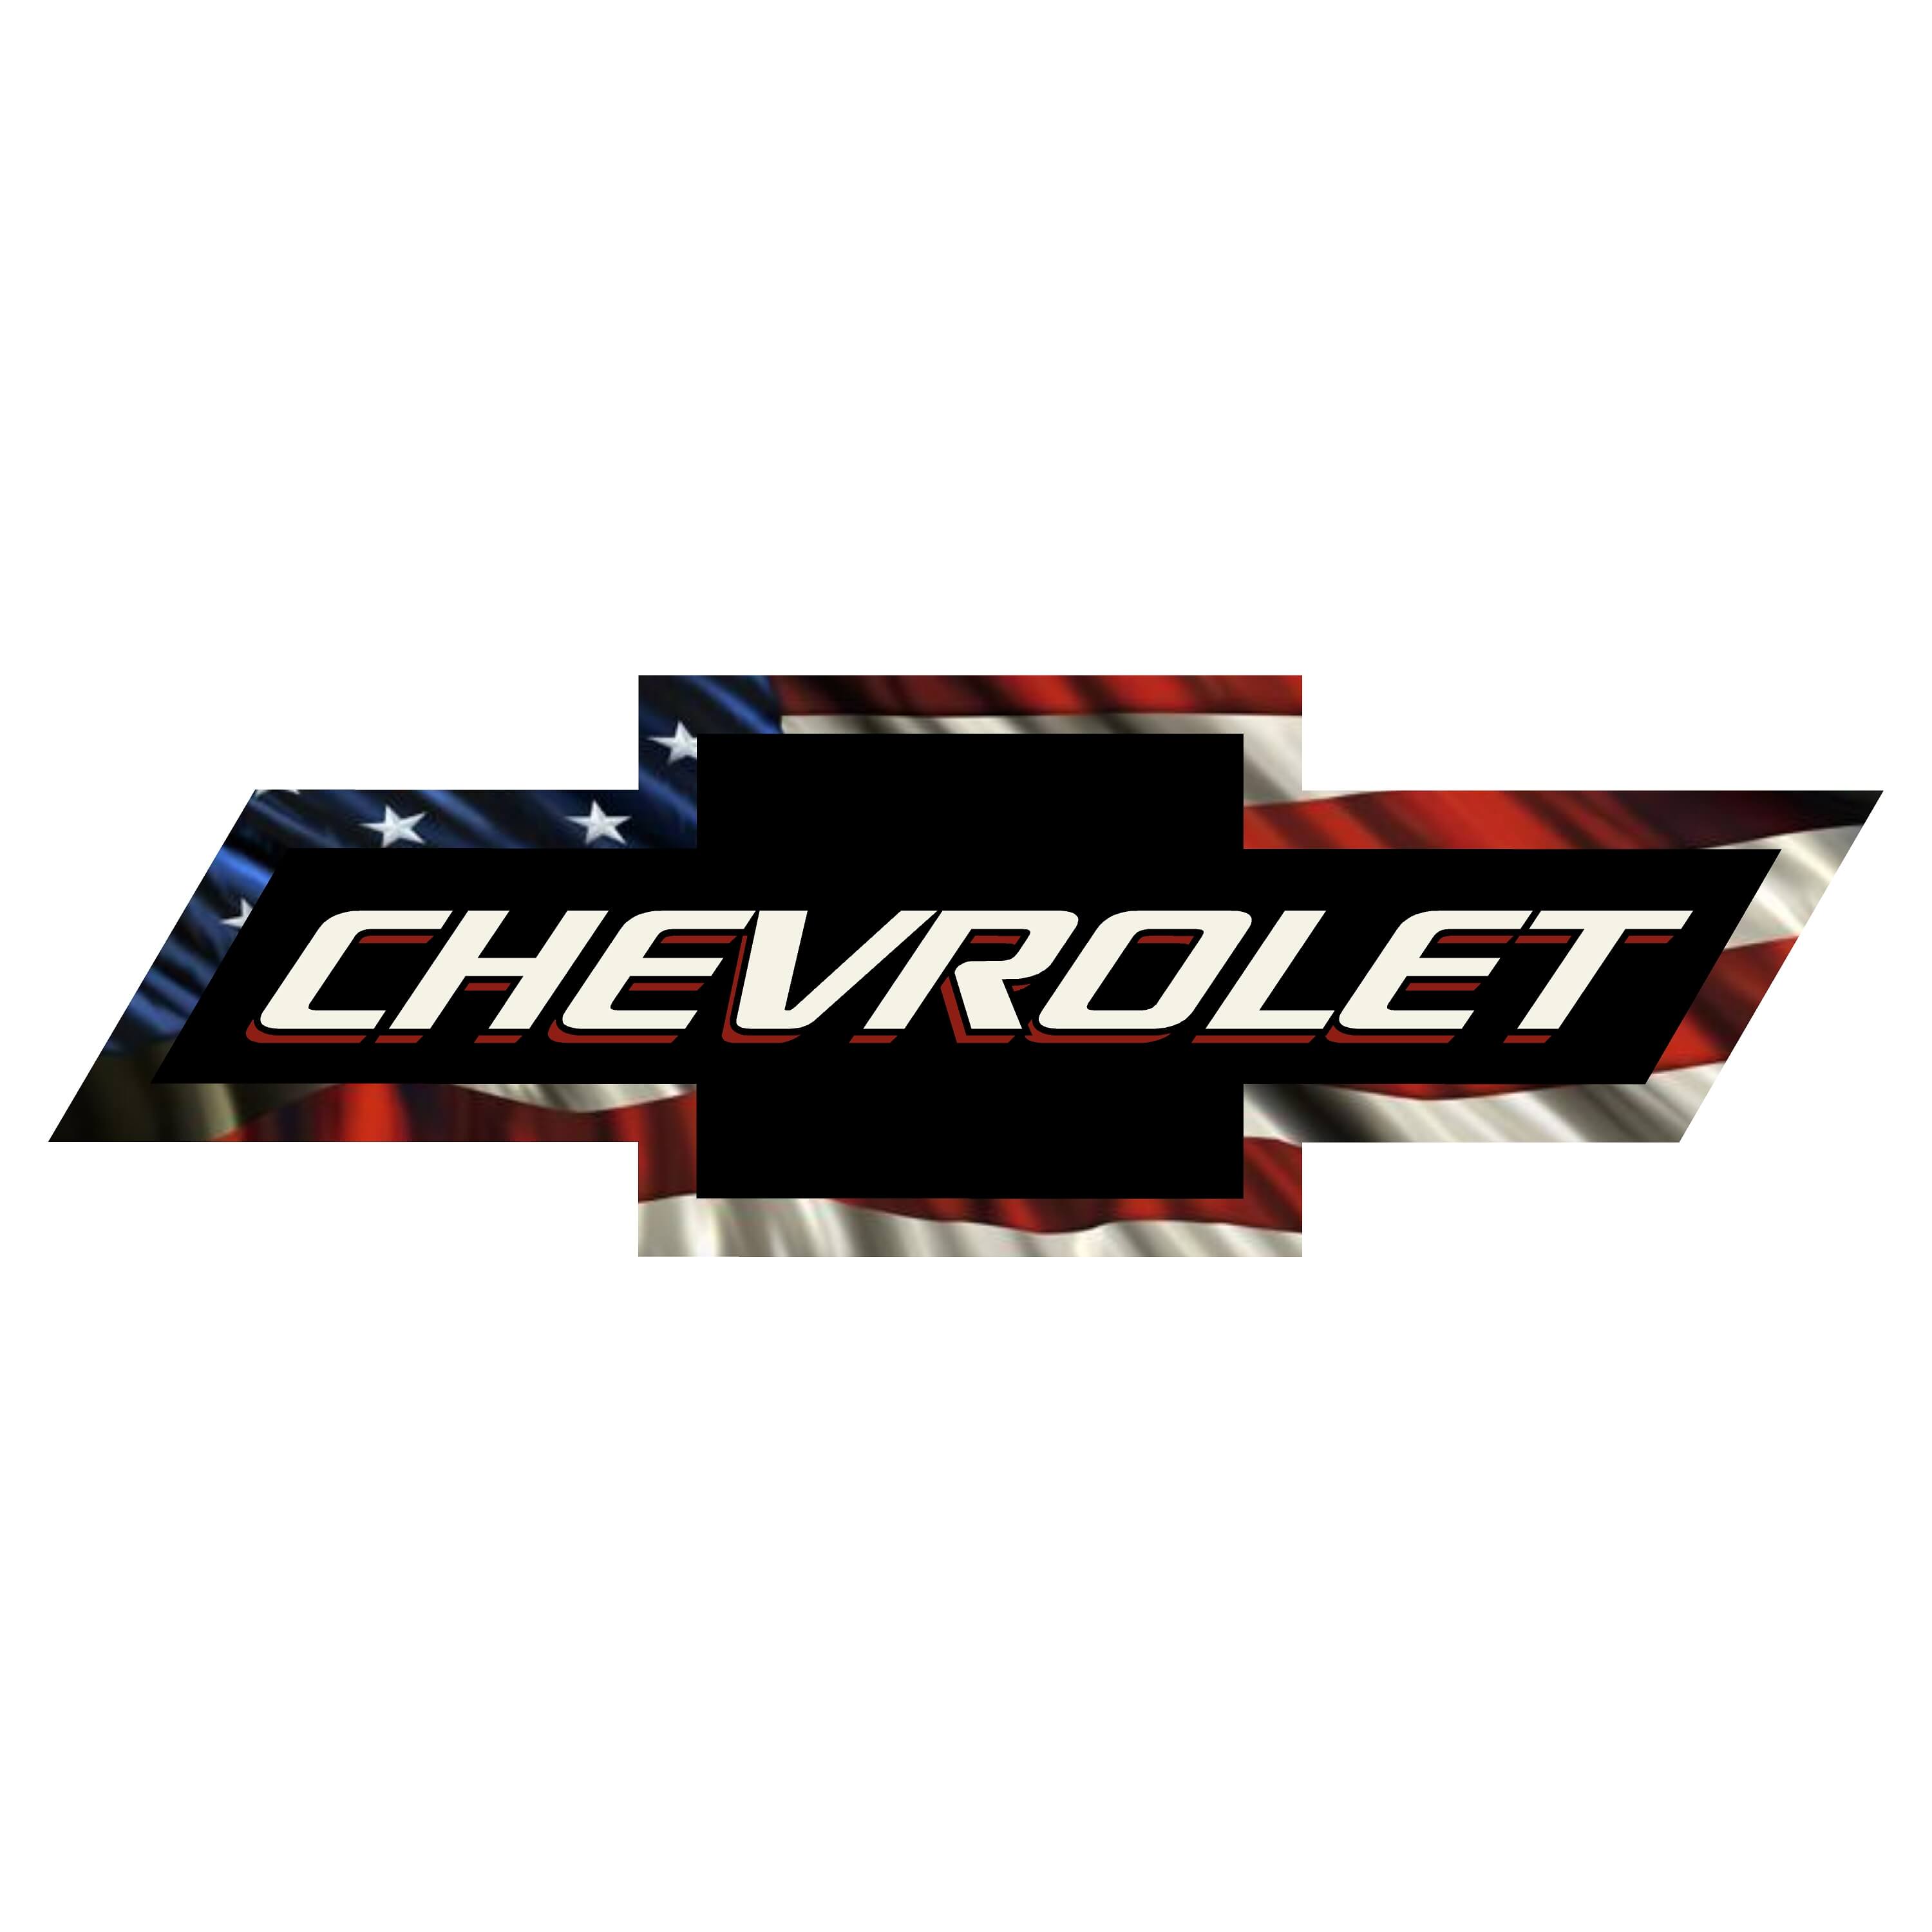 Chevy Bow Tie American Flag Decal/Sticker Vinyl Silverado Chevrolet FLG88lg 